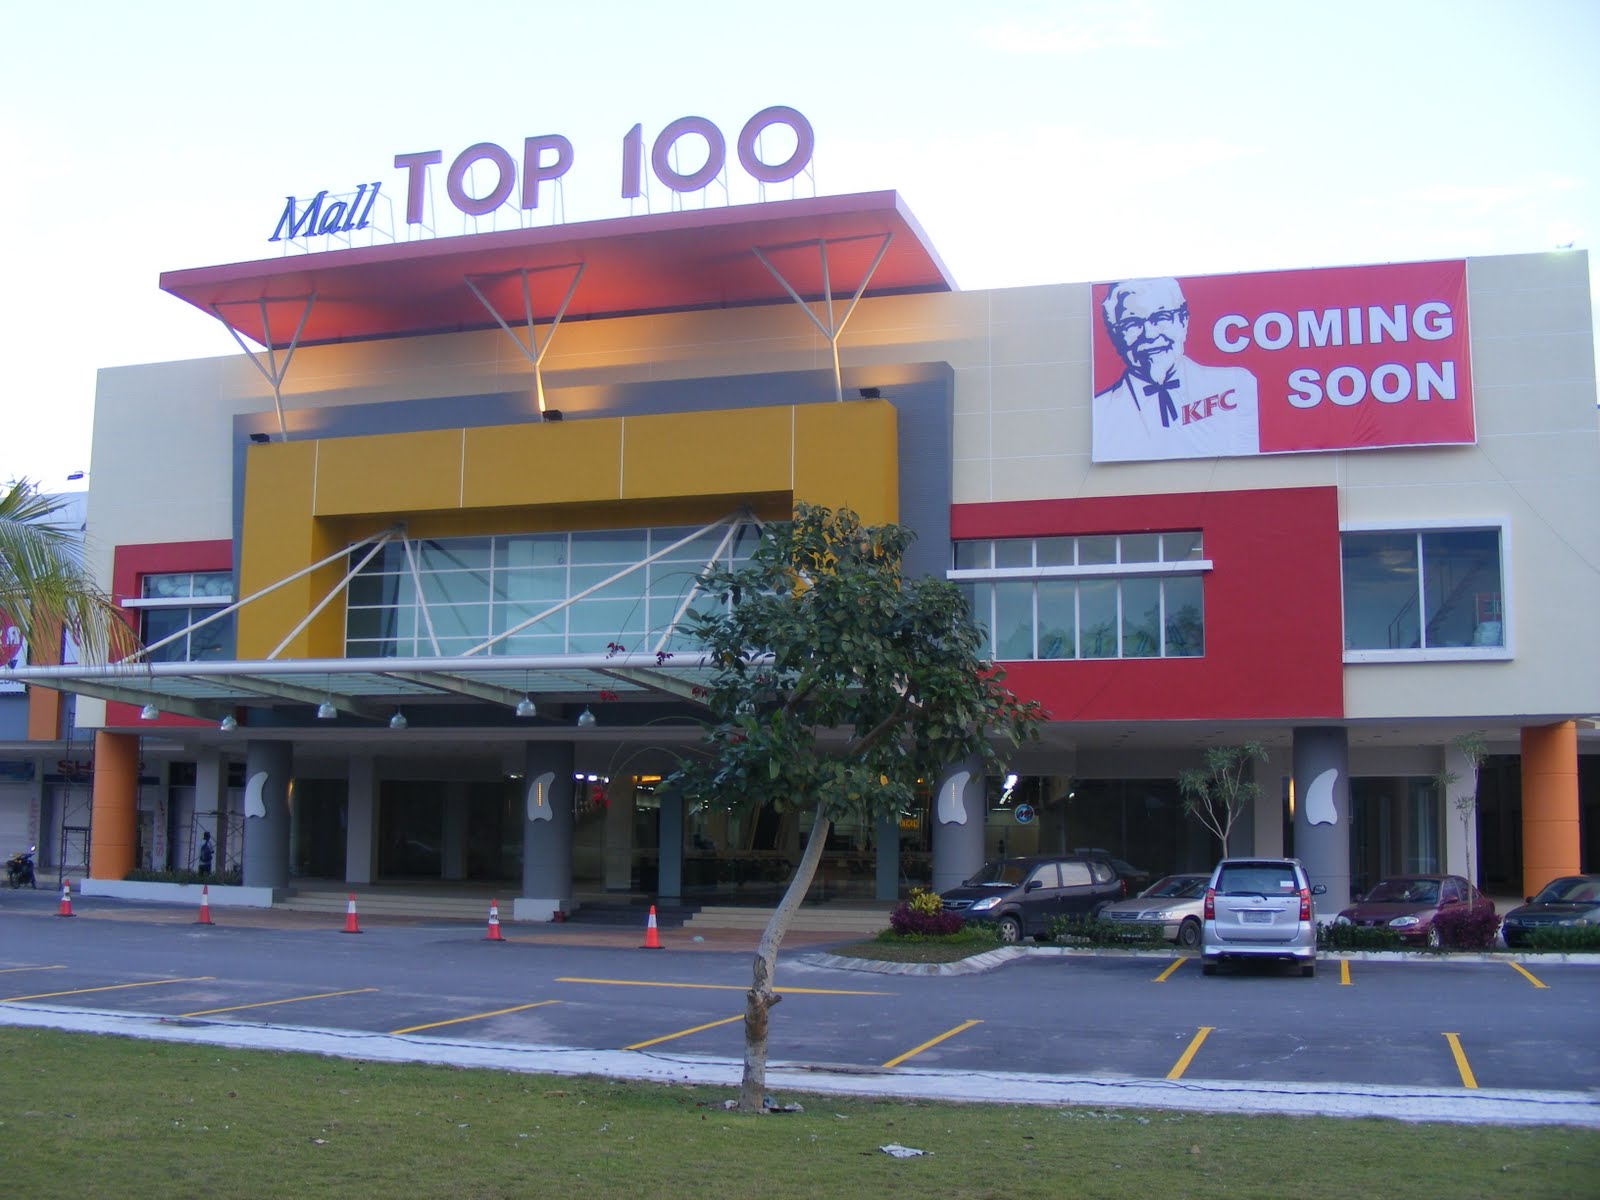 Batam activity: Hurry Shopping Mall Top 100 Batu Aji Batam 